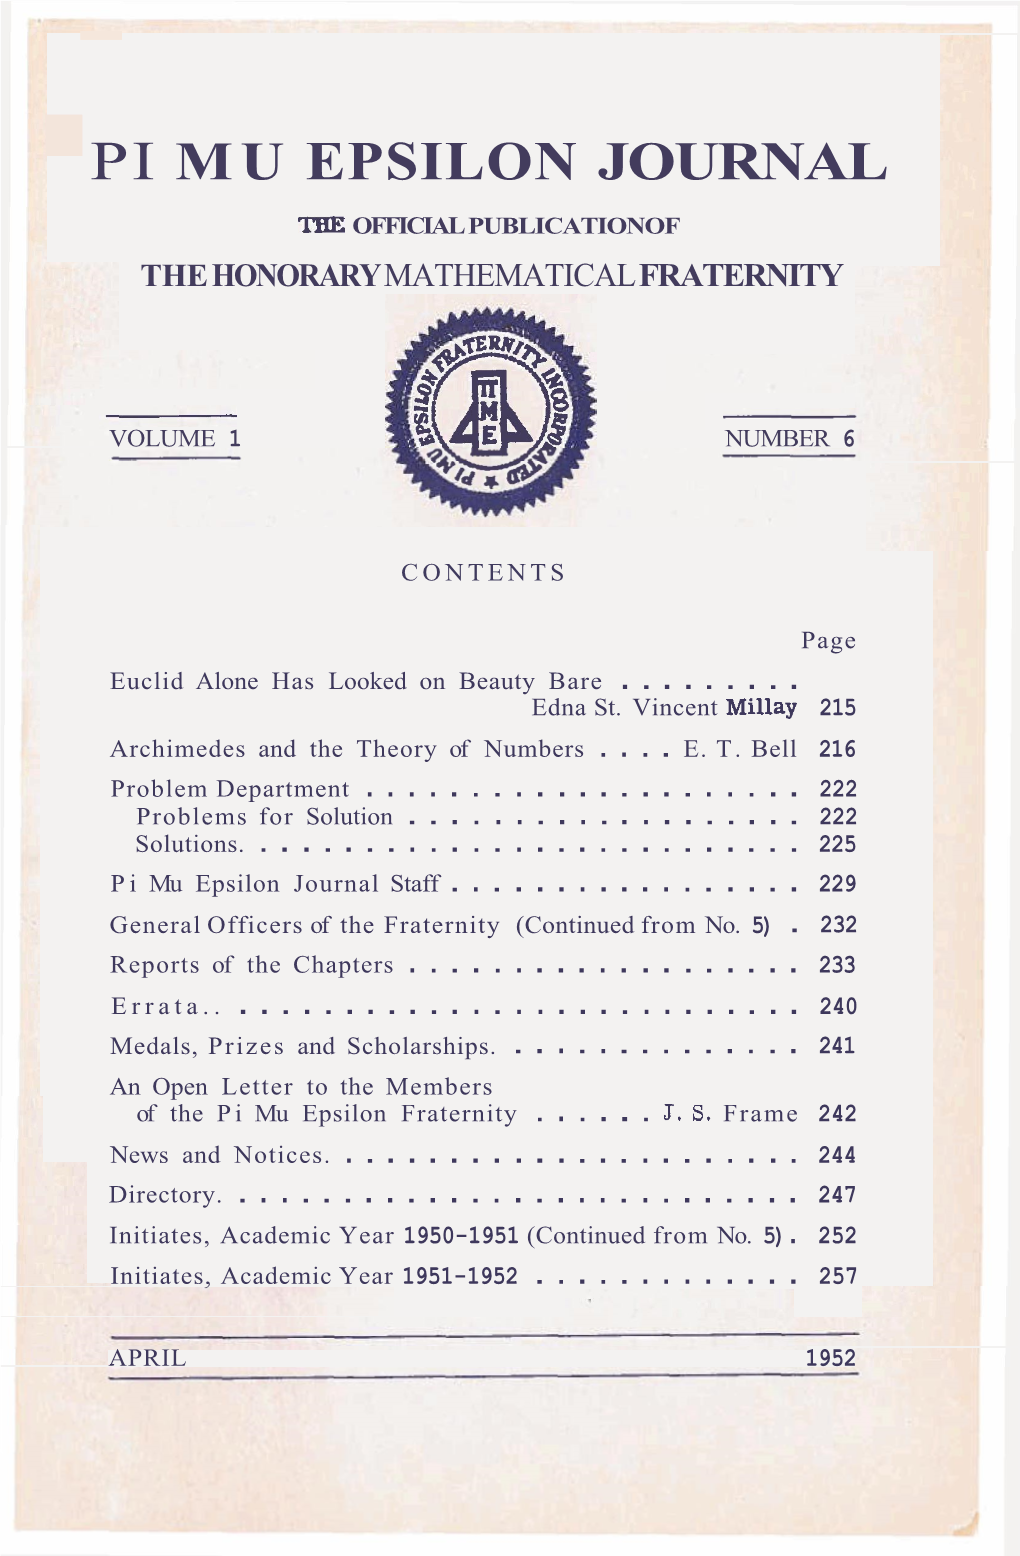 Pi Mu Epsilon Journal Tee Official Publicationof the Honorary Mathematical Fraternity